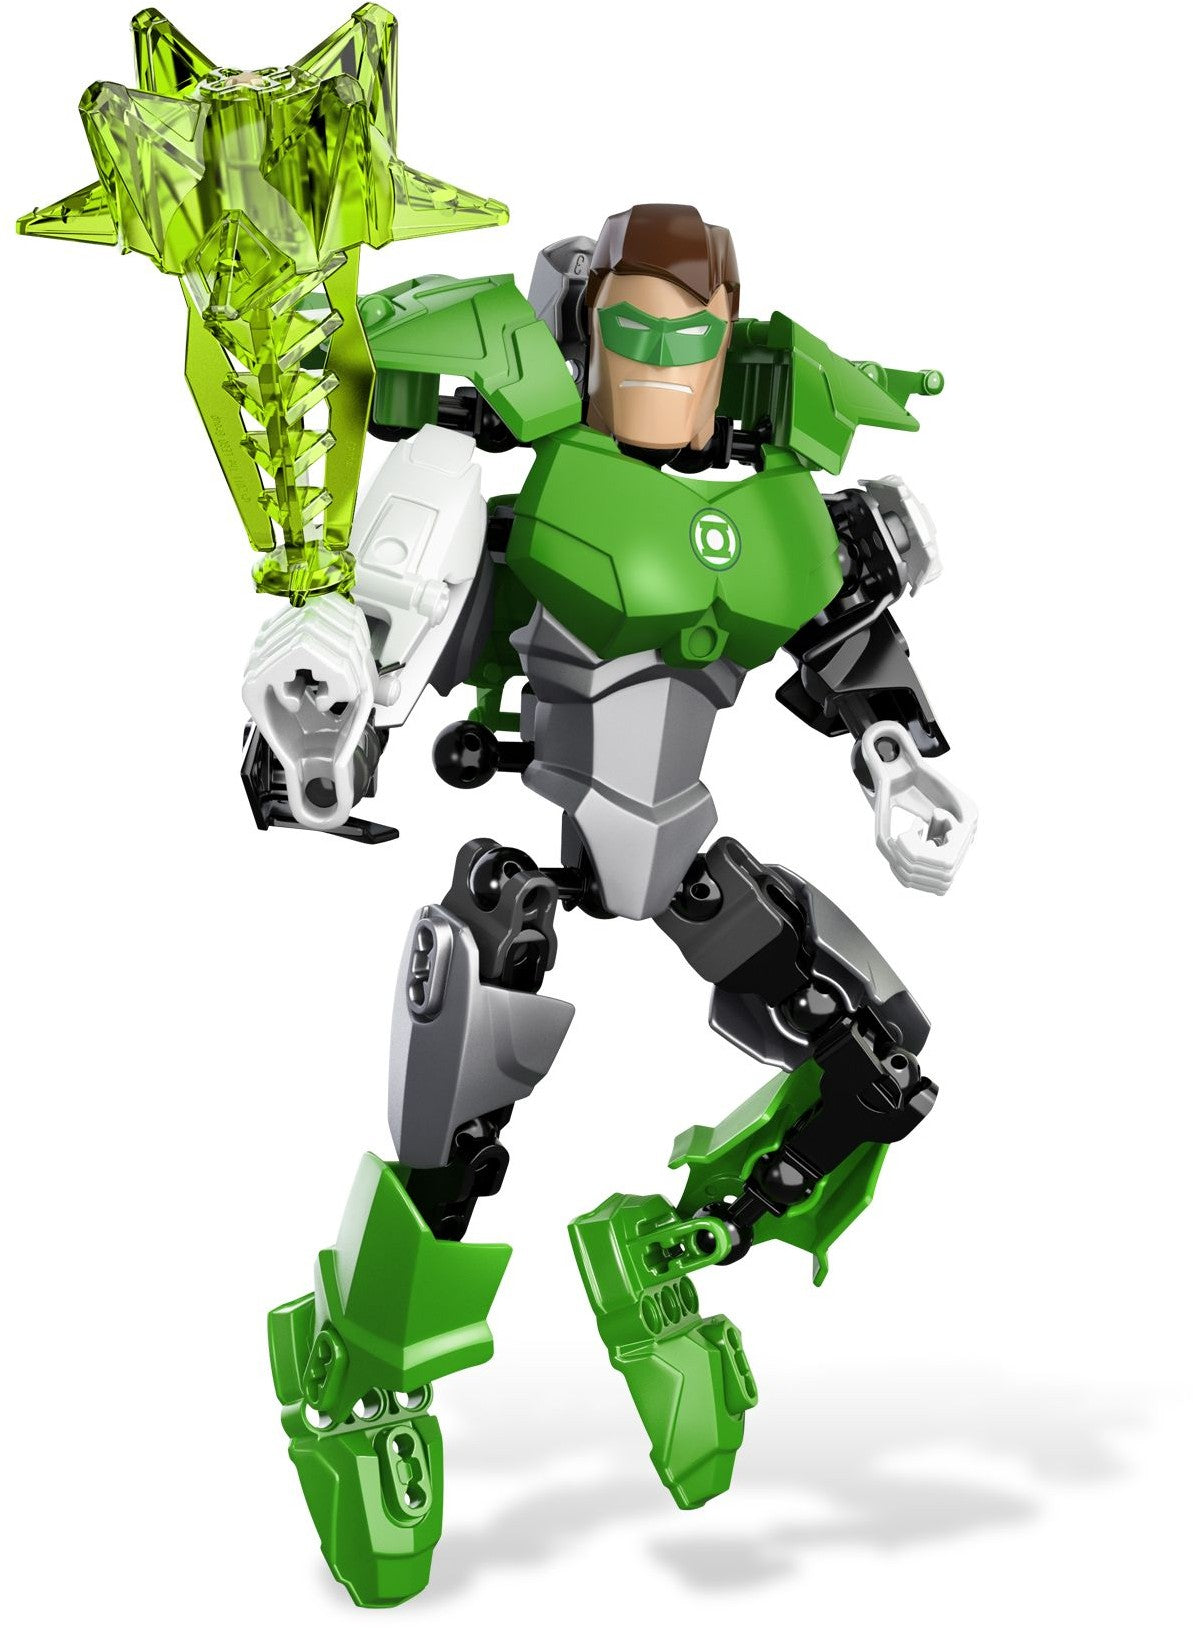 LEGO DC Super Heroes 4528 Green Lantern